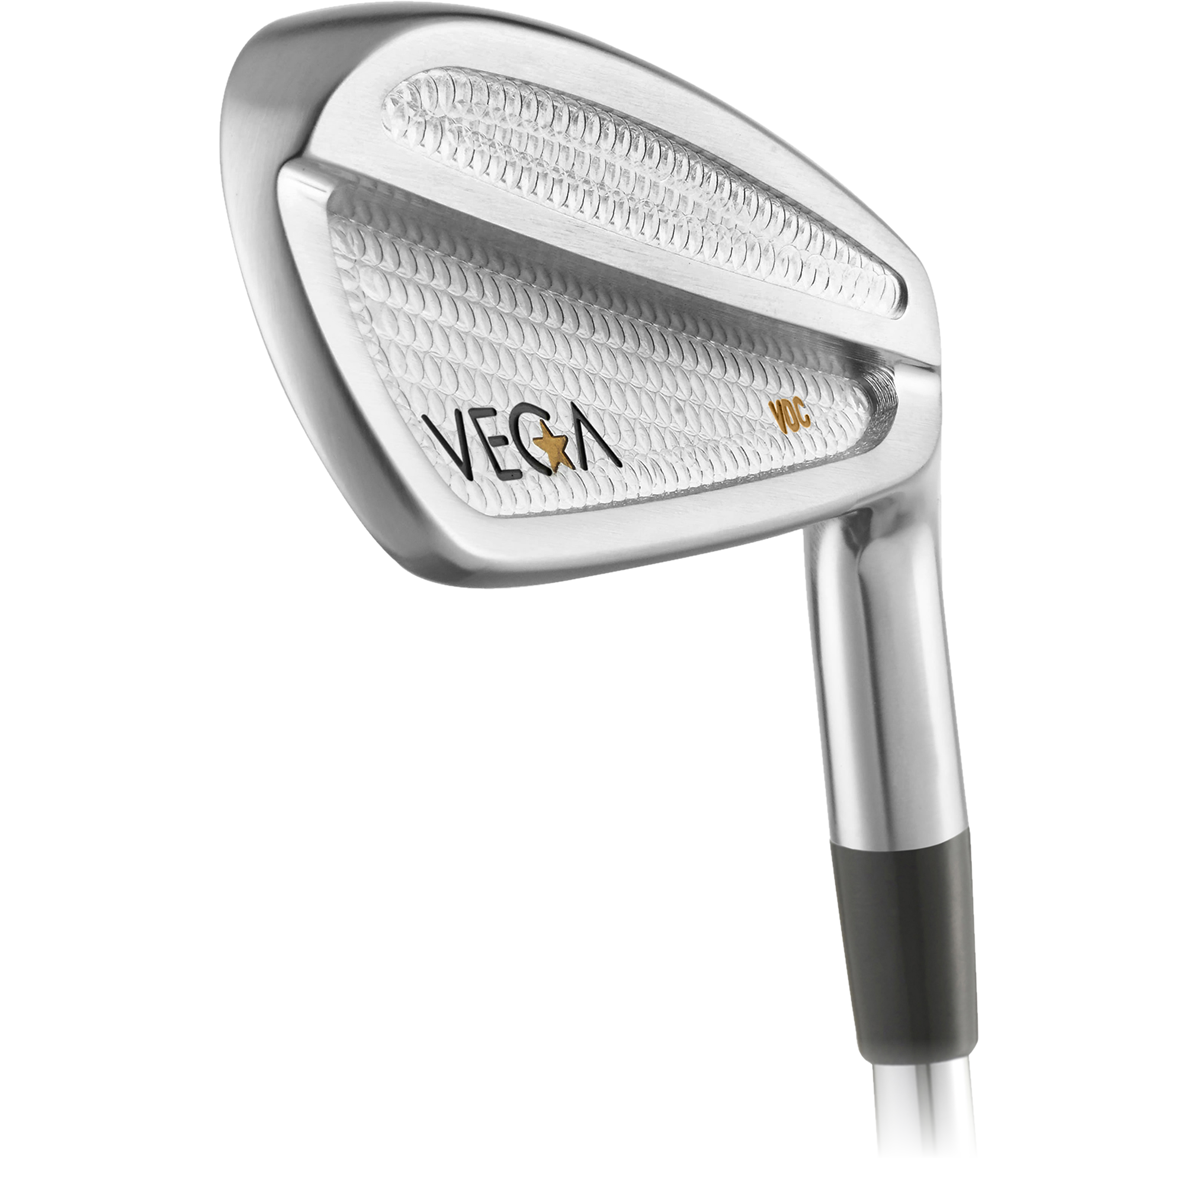 Vega VDC Irons image 2